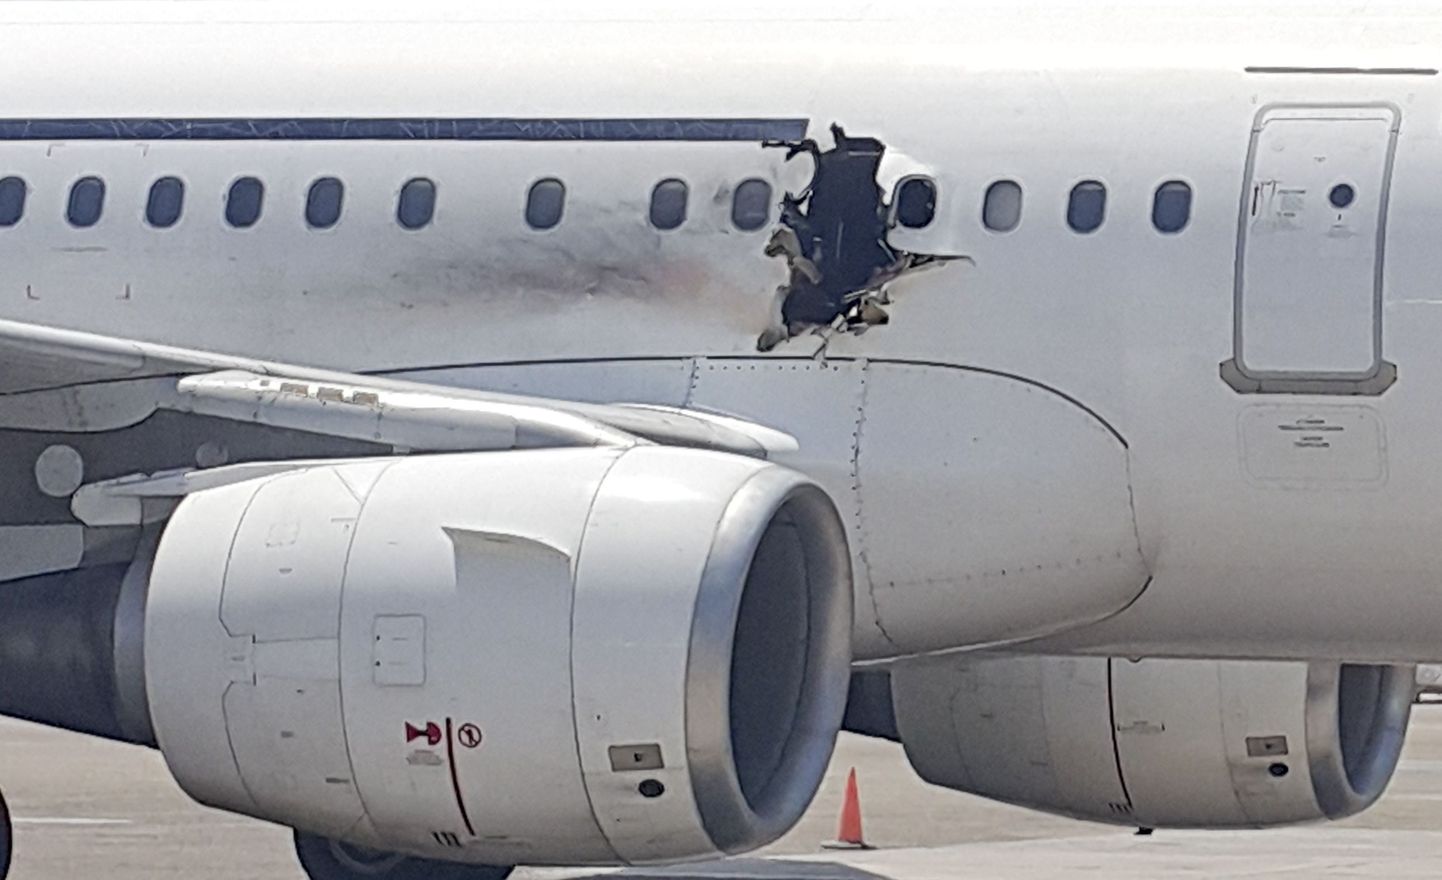 Lennufirma Daallo Airlines reisilennukis toimus plahvatus